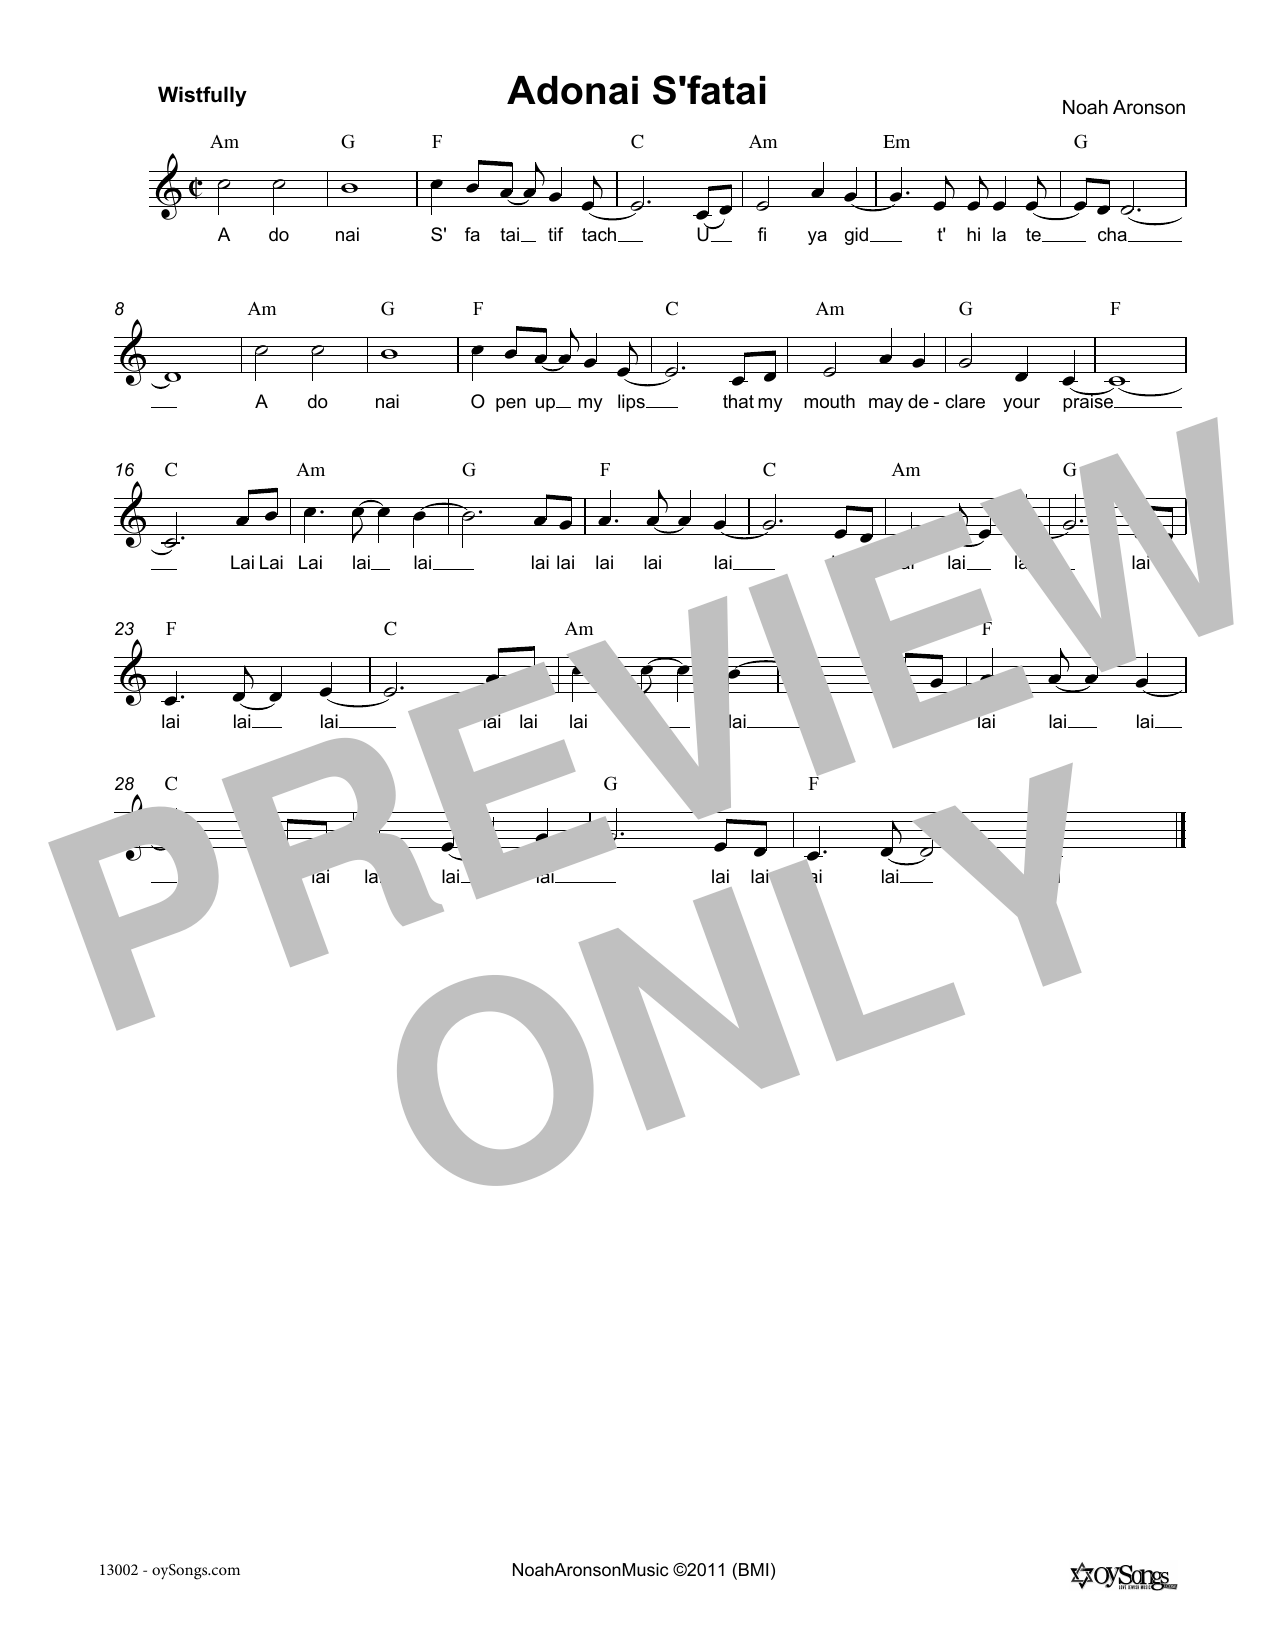 Noah Aronson Adonai S'fatai sheet music notes and chords arranged for Lead Sheet / Fake Book